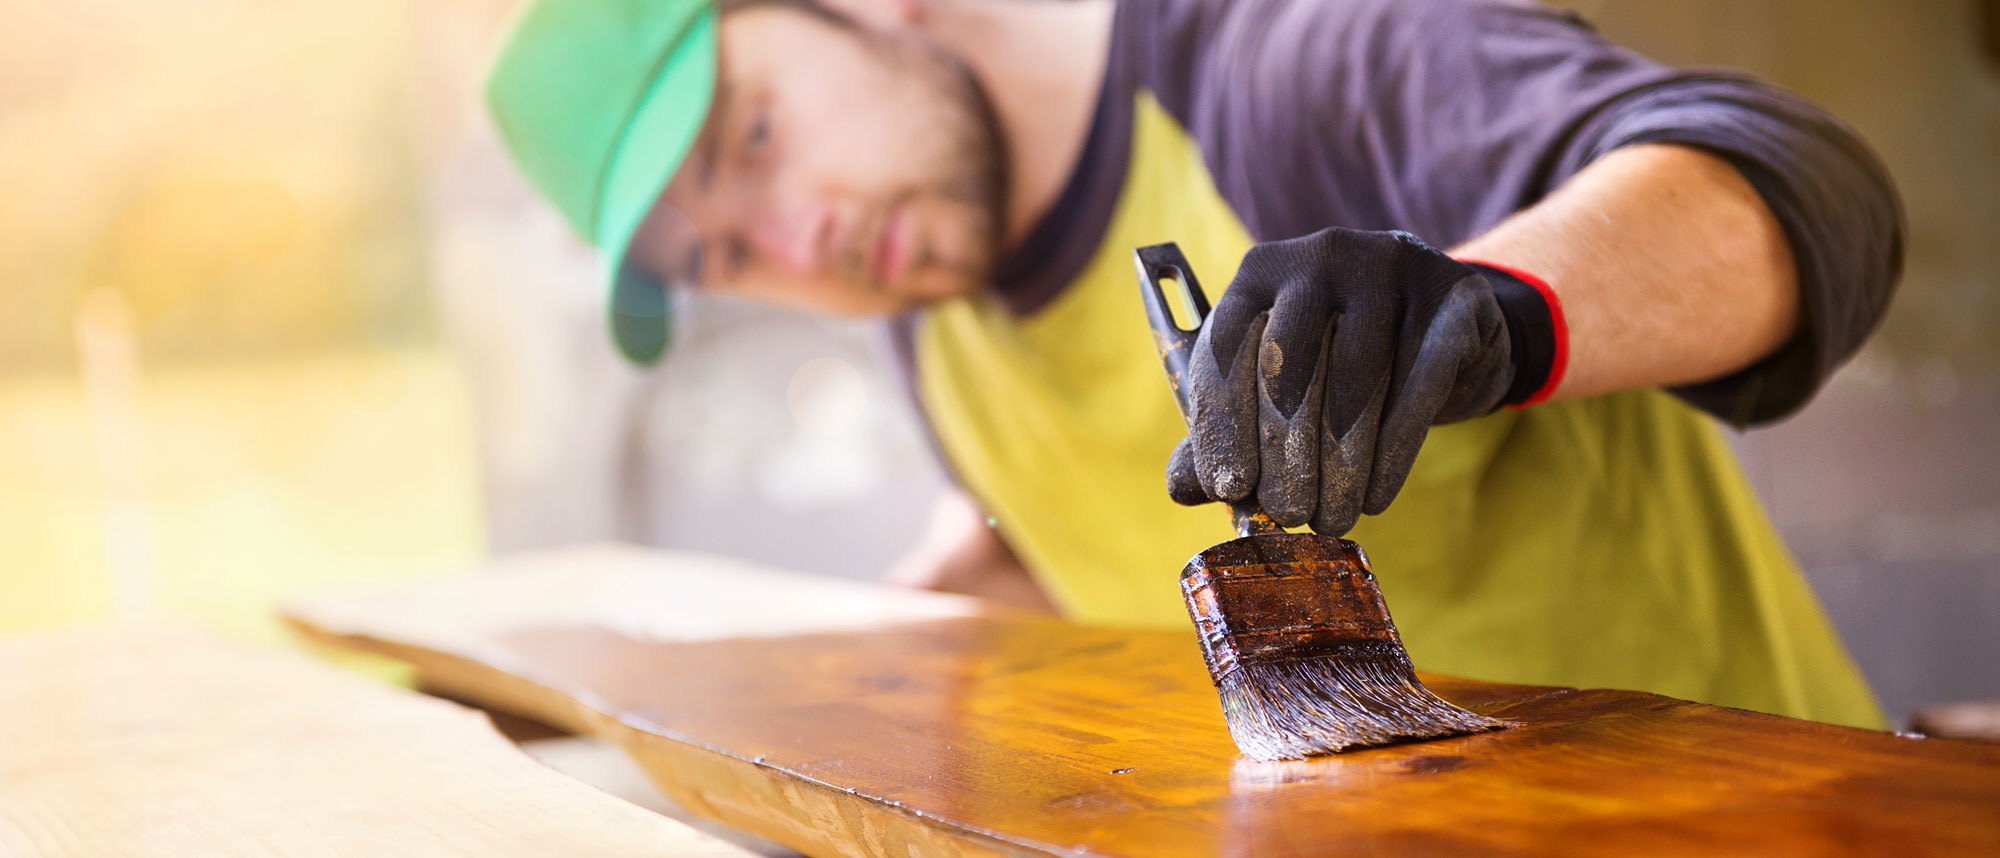 Handyman Varnishing Wooden Plank